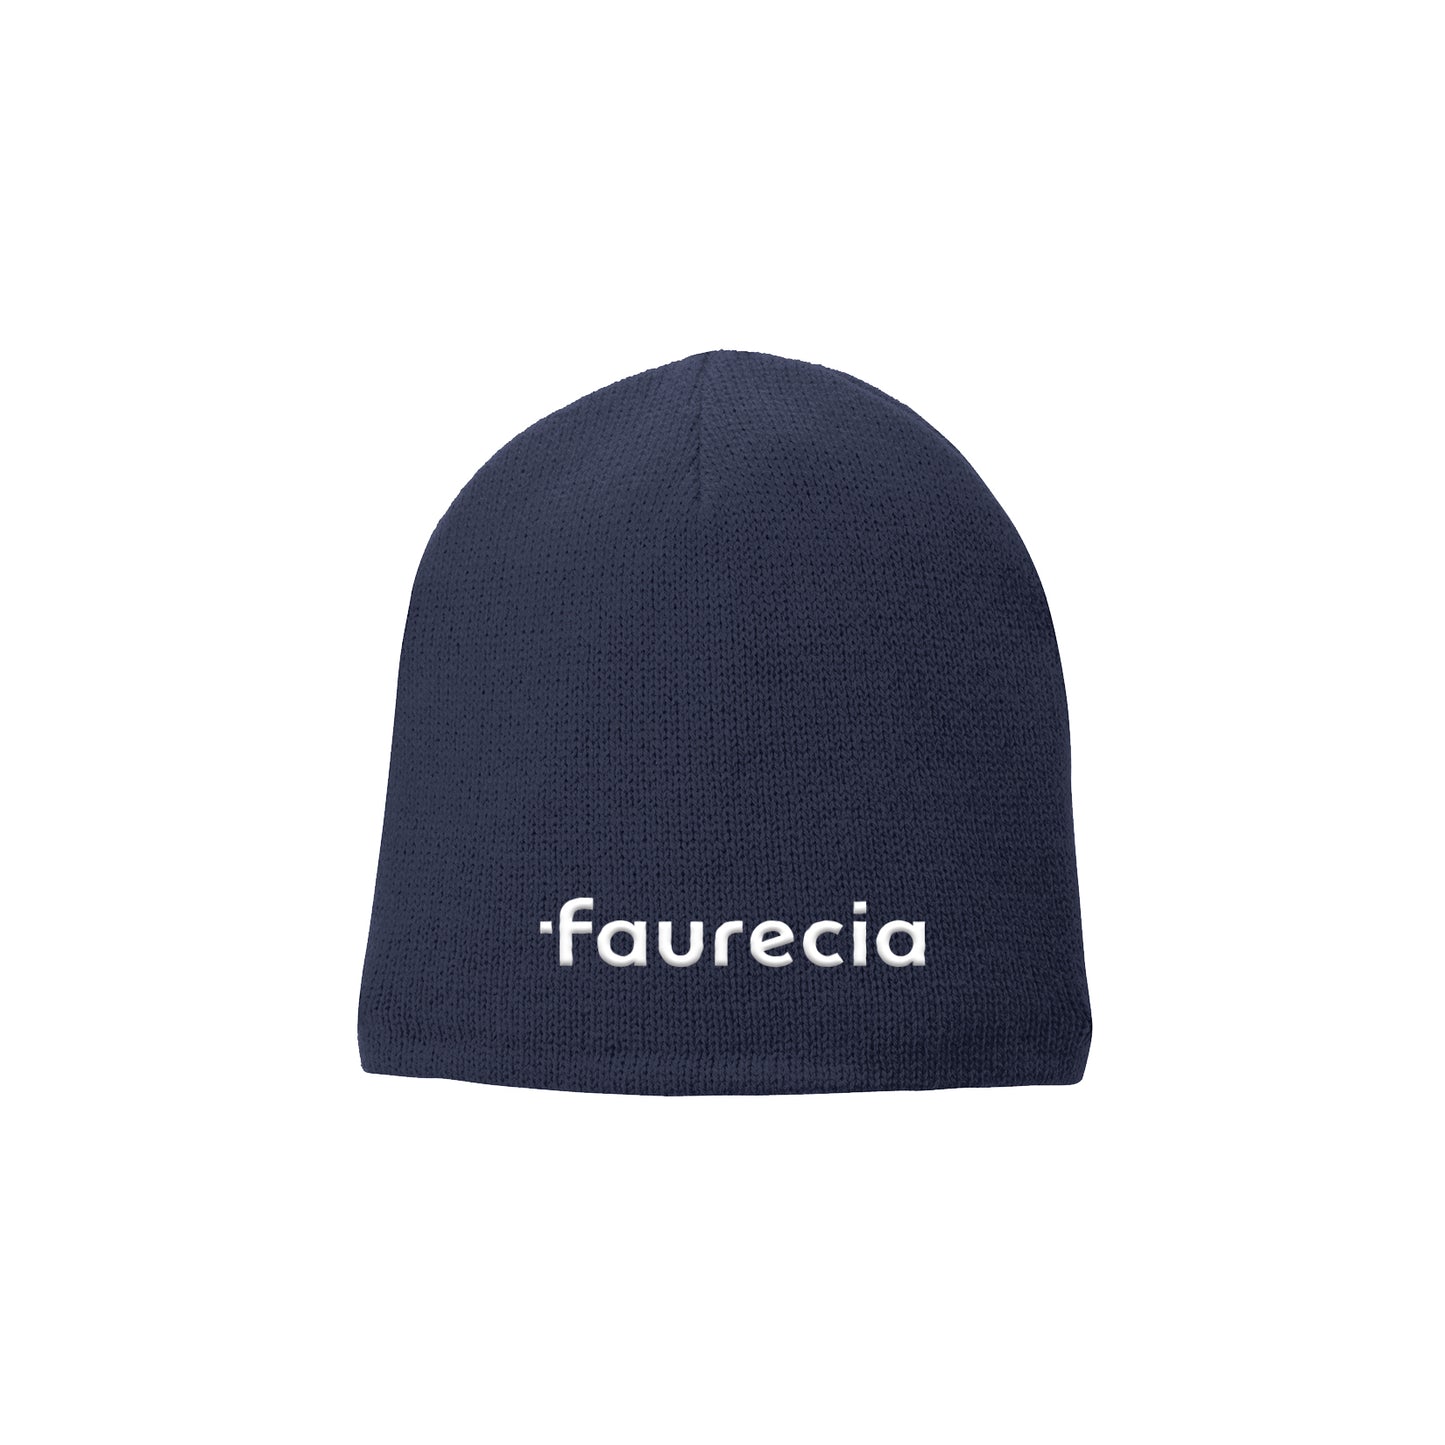 Faurecia | Fleece-Lined Beanie Cap (Navy)